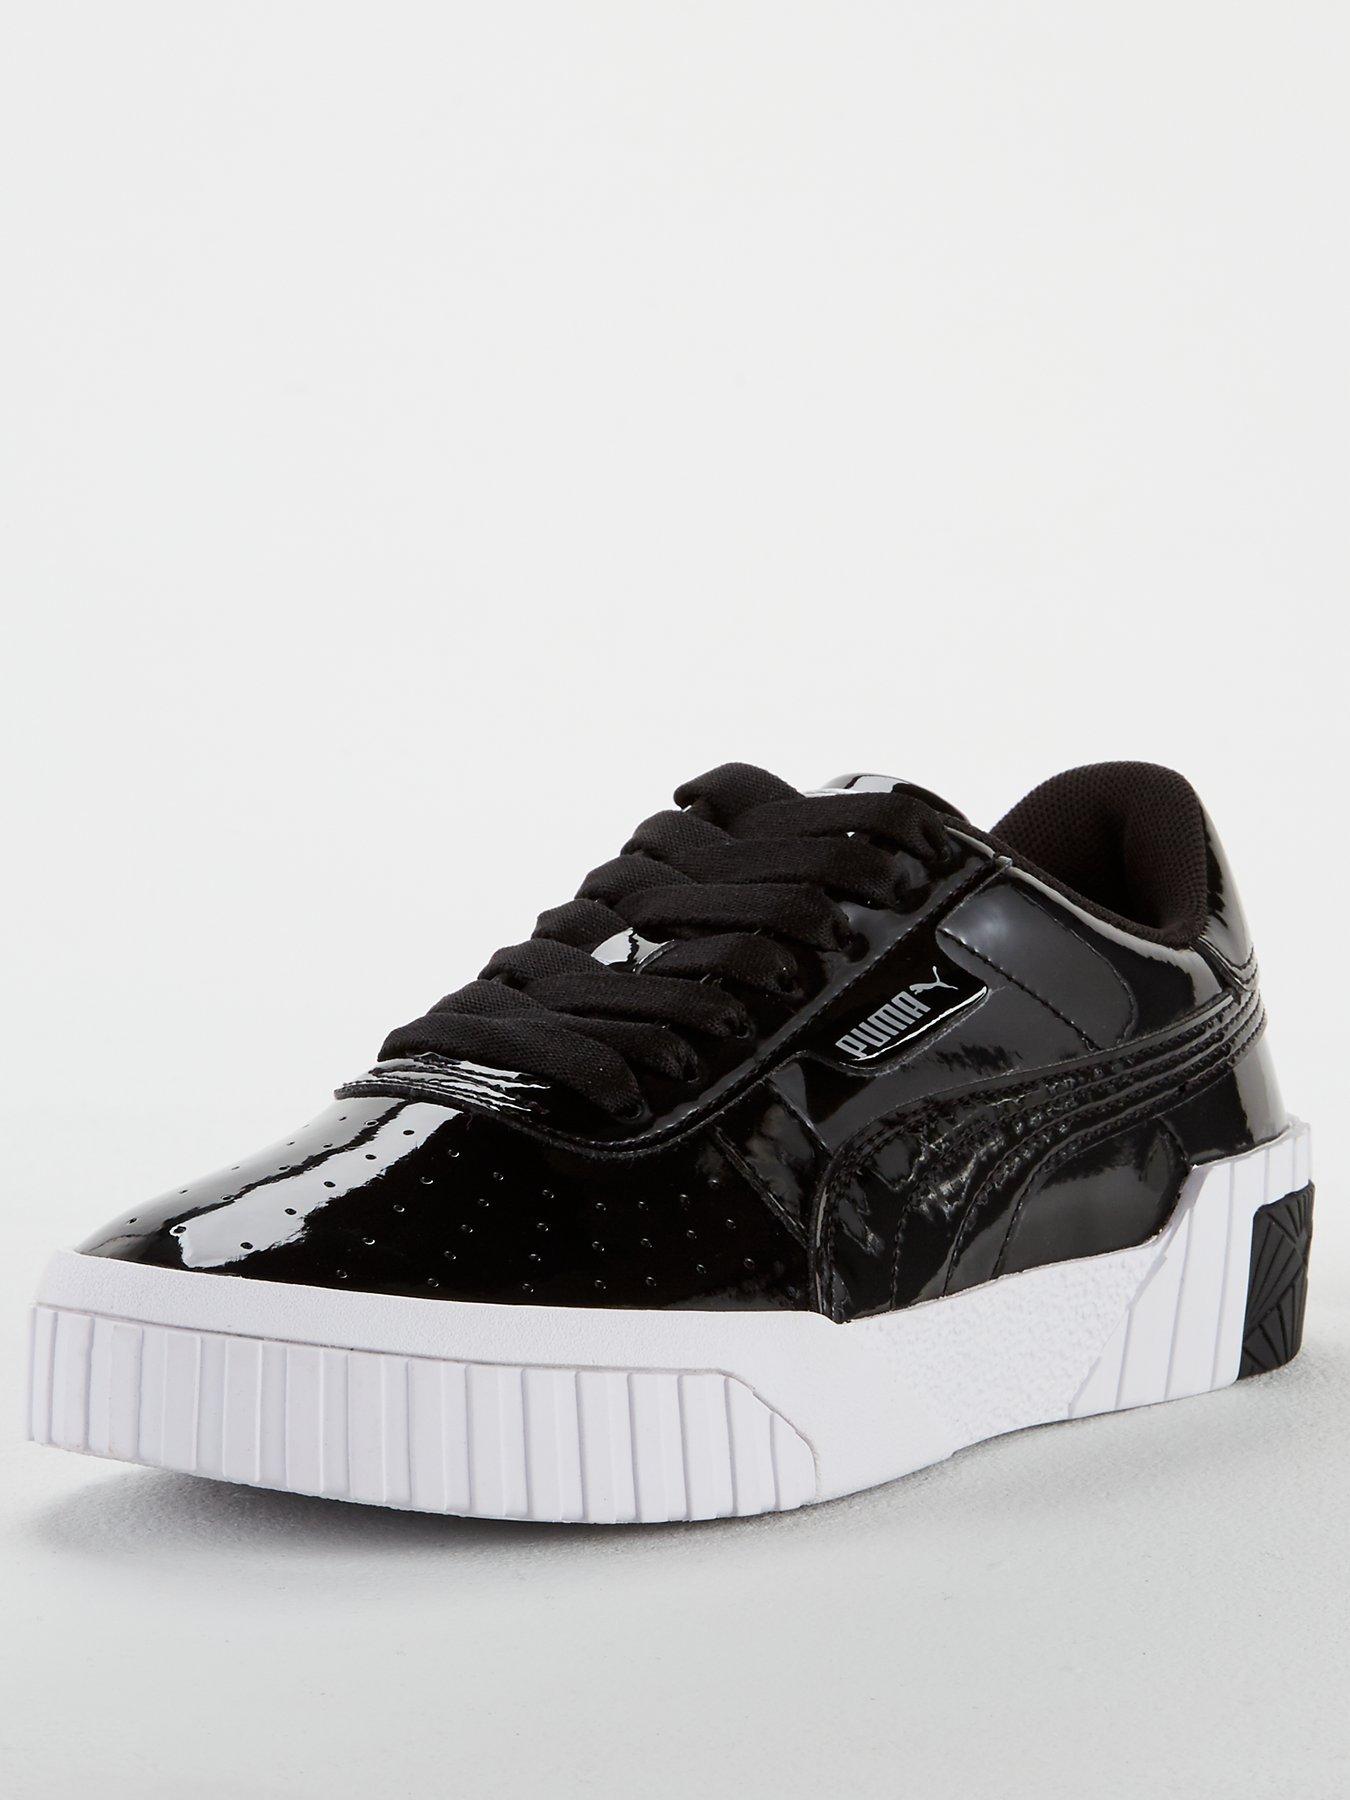 shiny black puma shoes